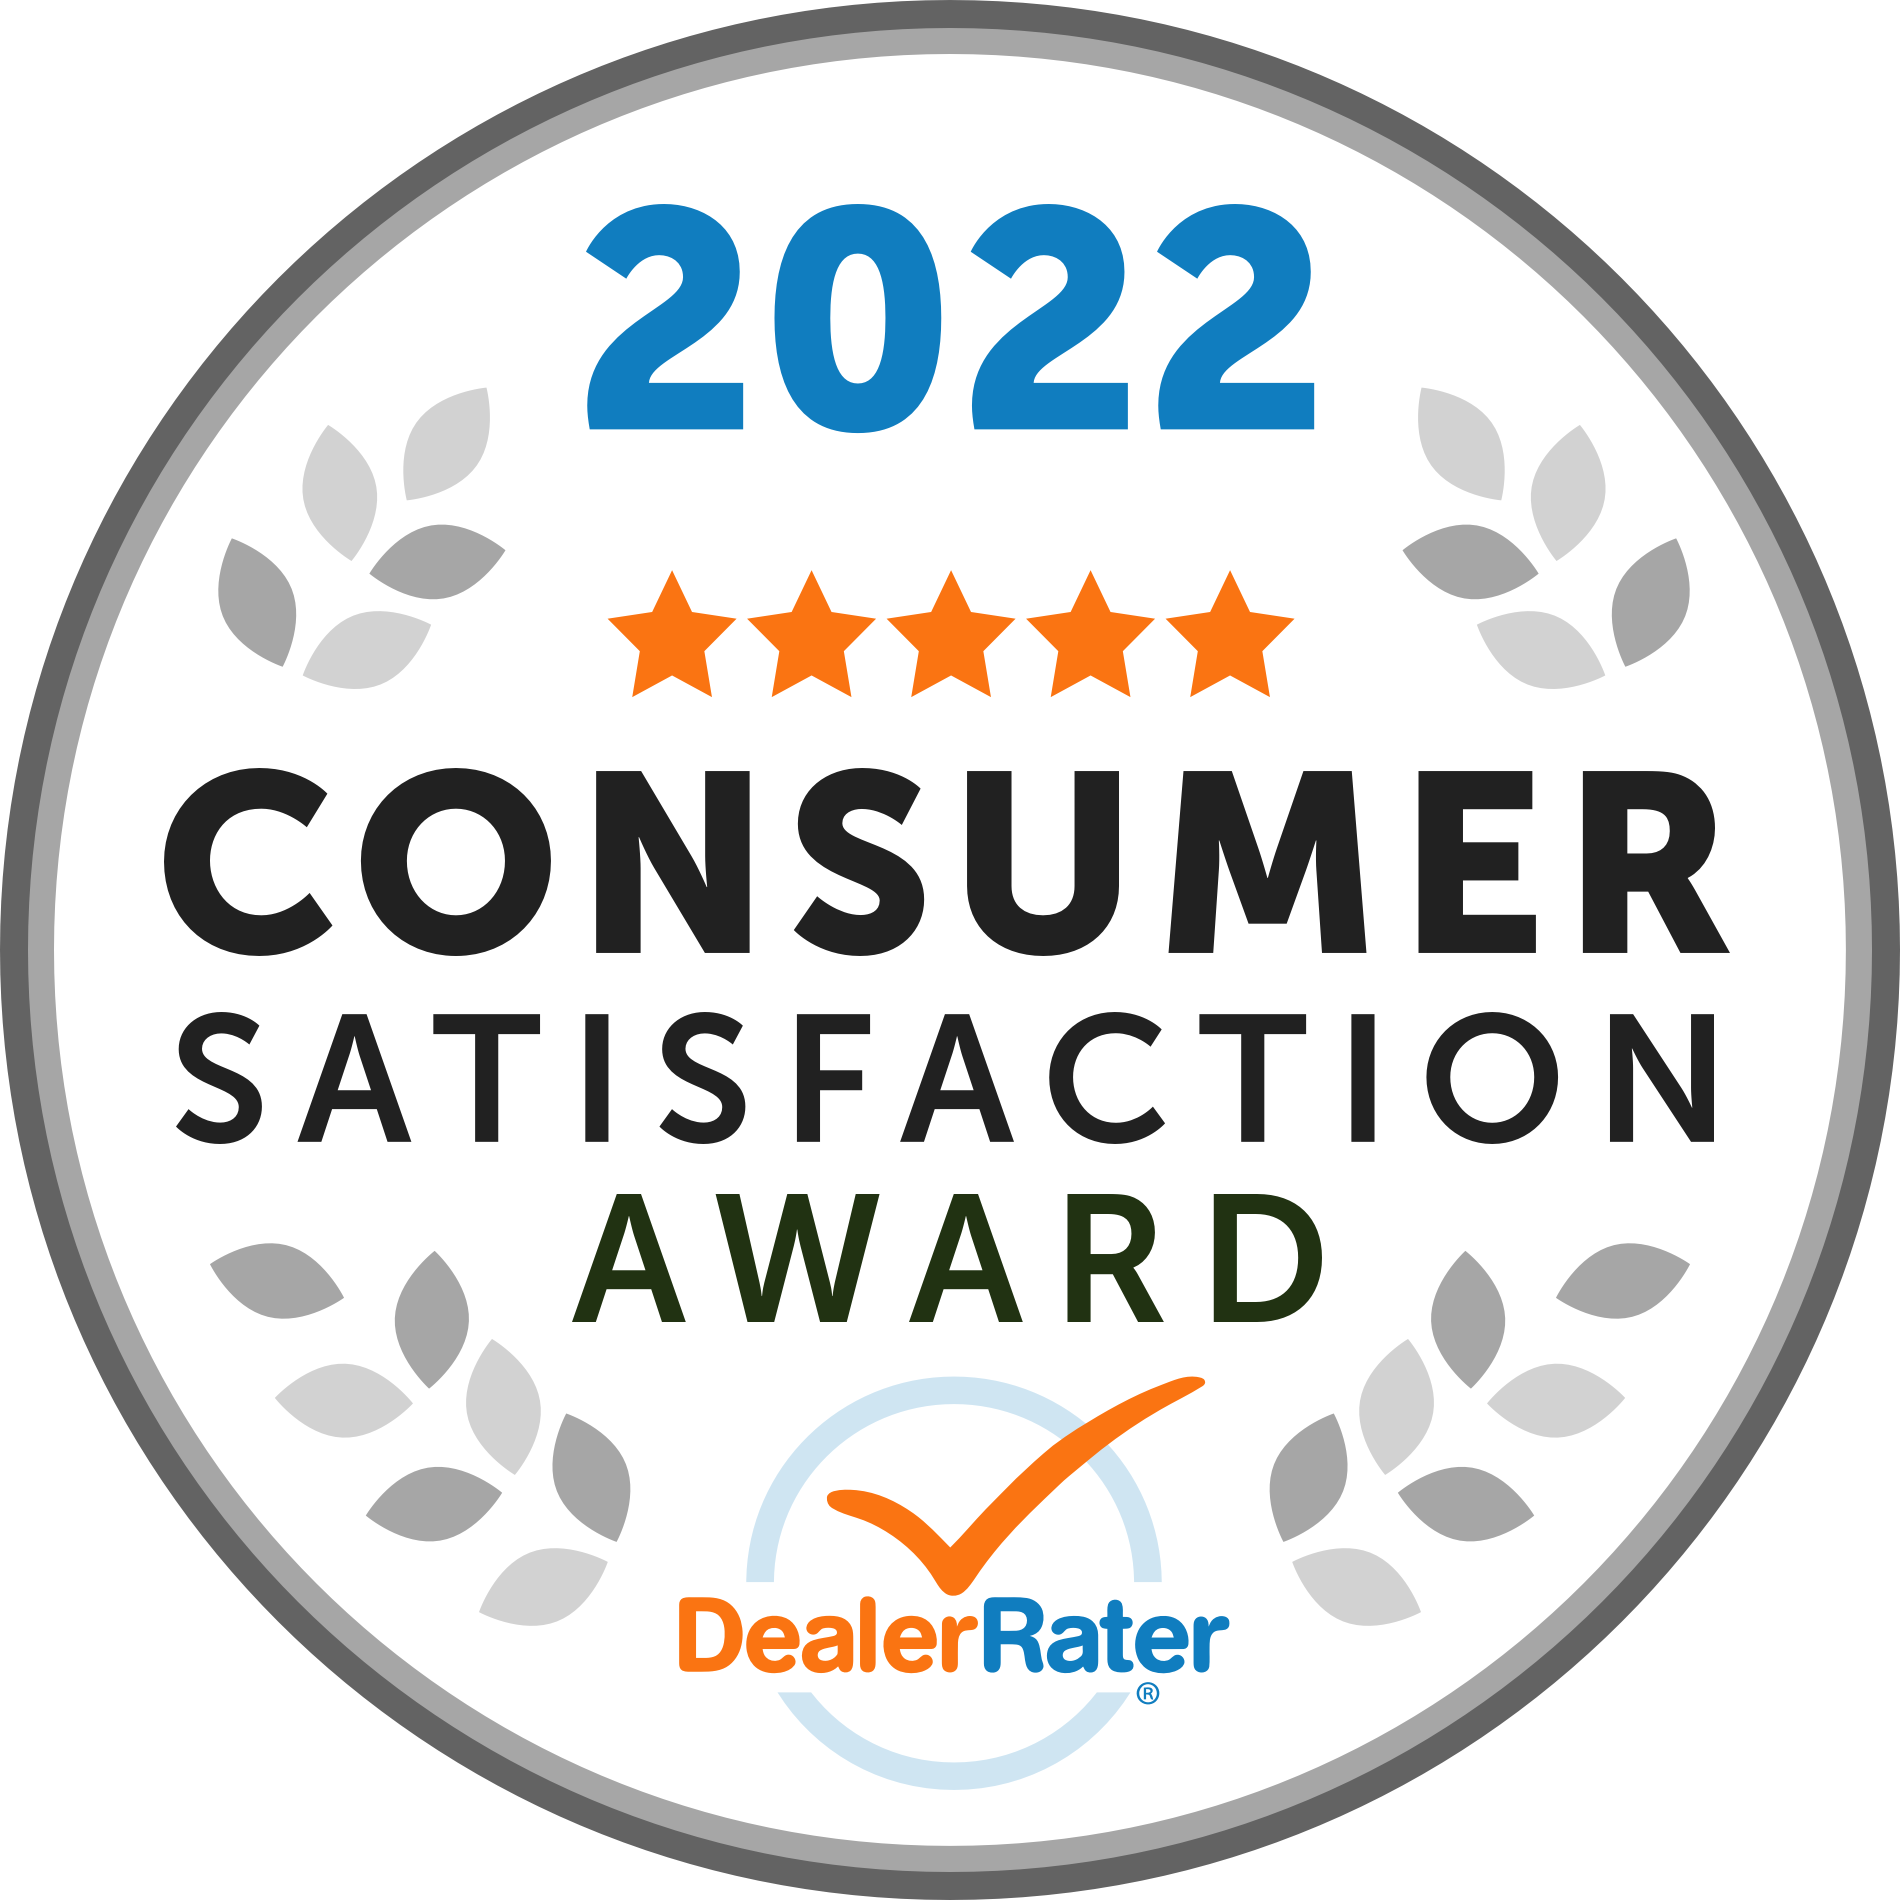 2022 consumer satisfaction award